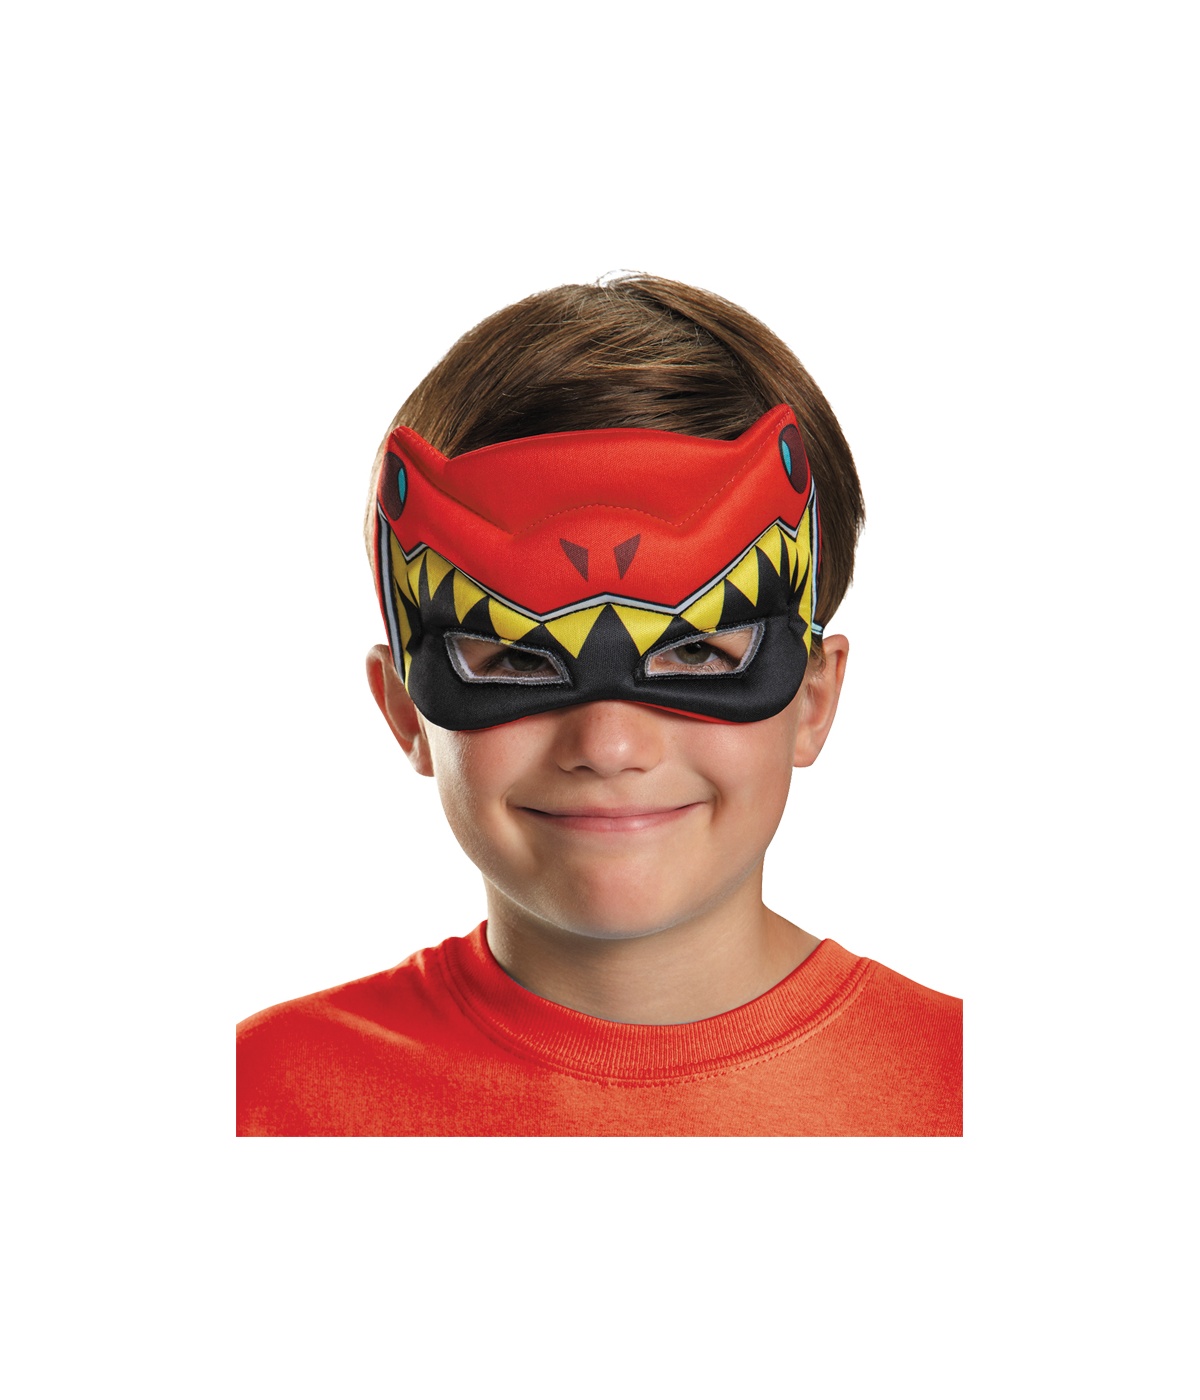  Boys Red Power Ranger Puffy Mask